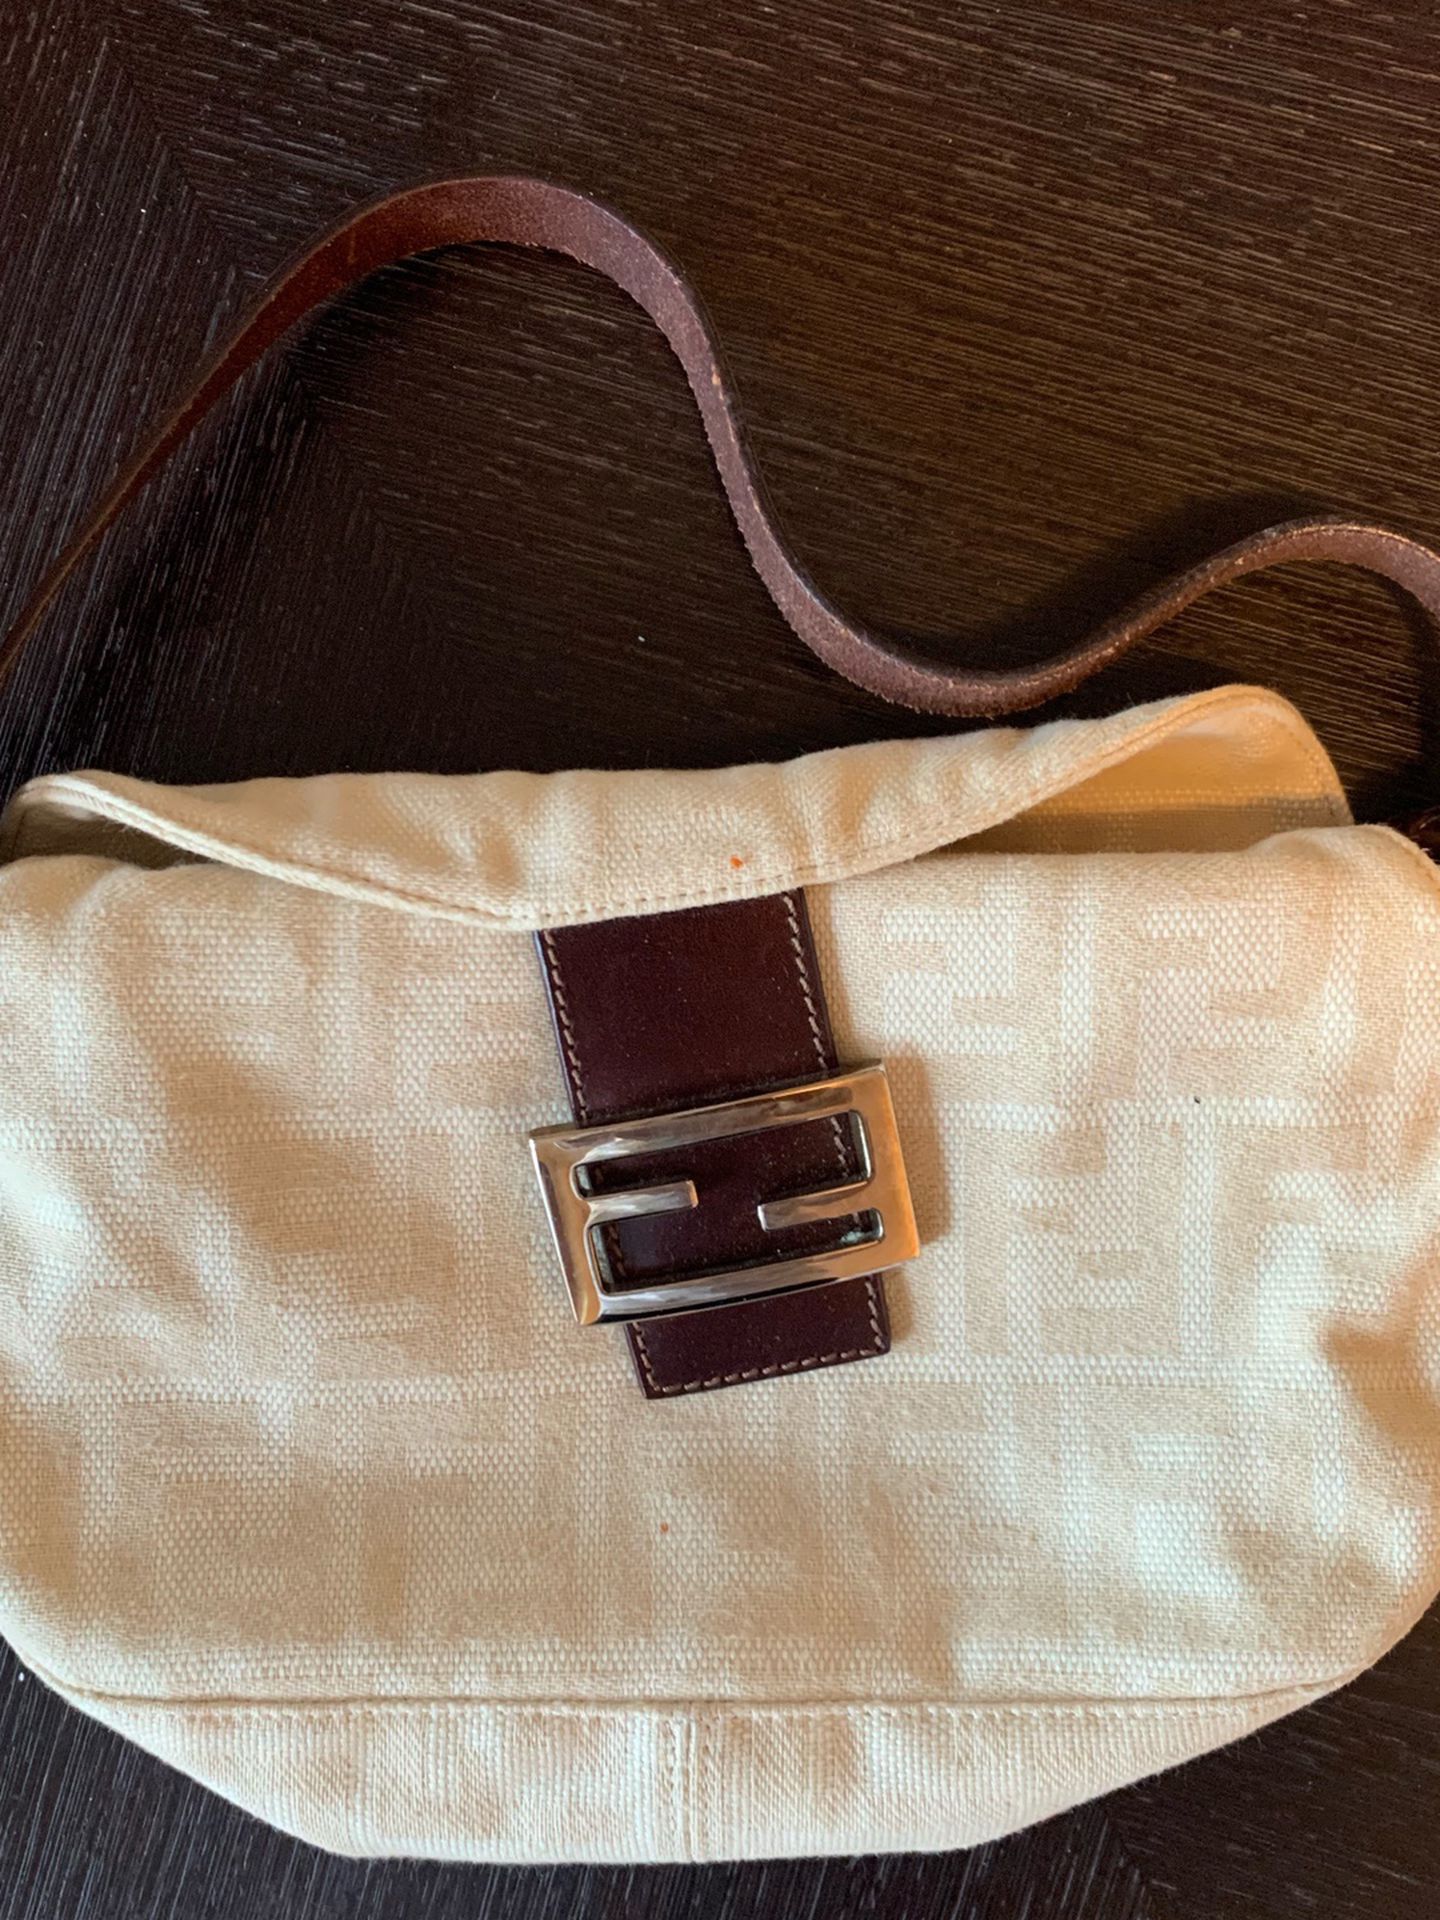 Authentic FENDI Zucca Mamma Canvas Leather Shoulder Bag (Cream White)